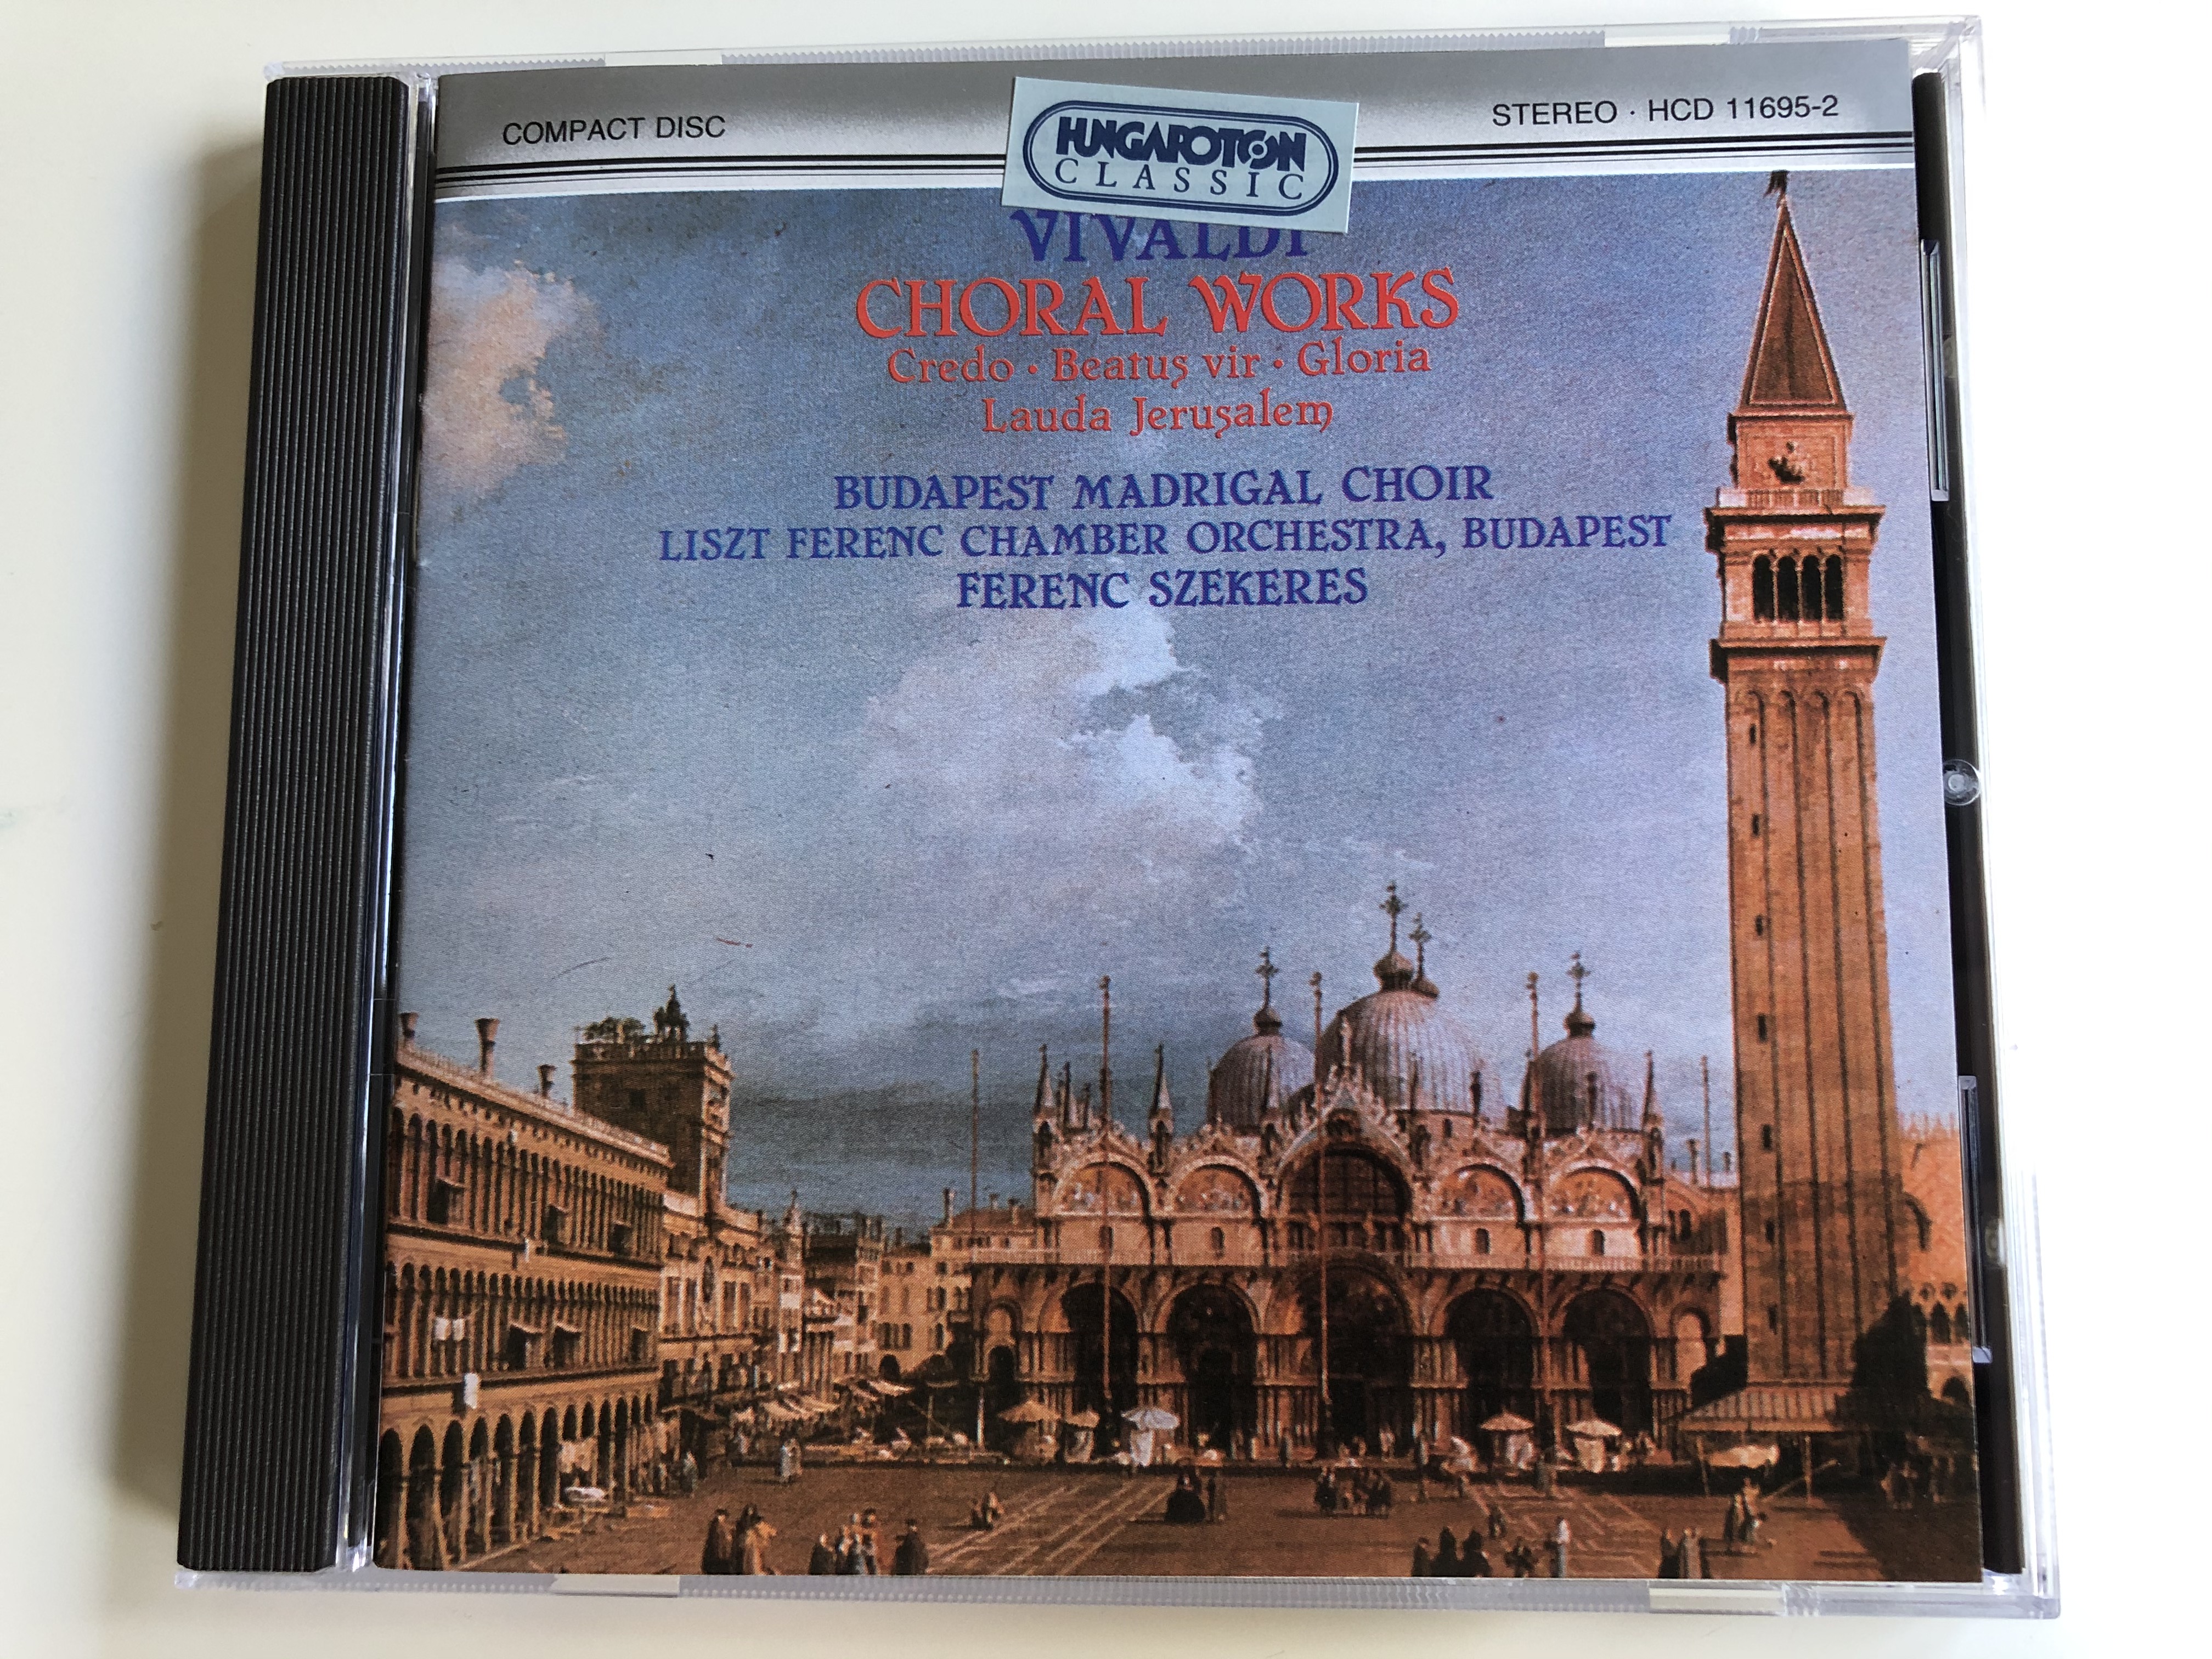 vivaldi-choral-works-credo-beatus-vir-gloria-lauda-jerusalem-budapest-madrigal-choir-liszt-ferenc-chamber-orchestra-budapest-ferenc-szekeres-hungaroton-classic-audio-cd-1994-stereo-1-.jpg